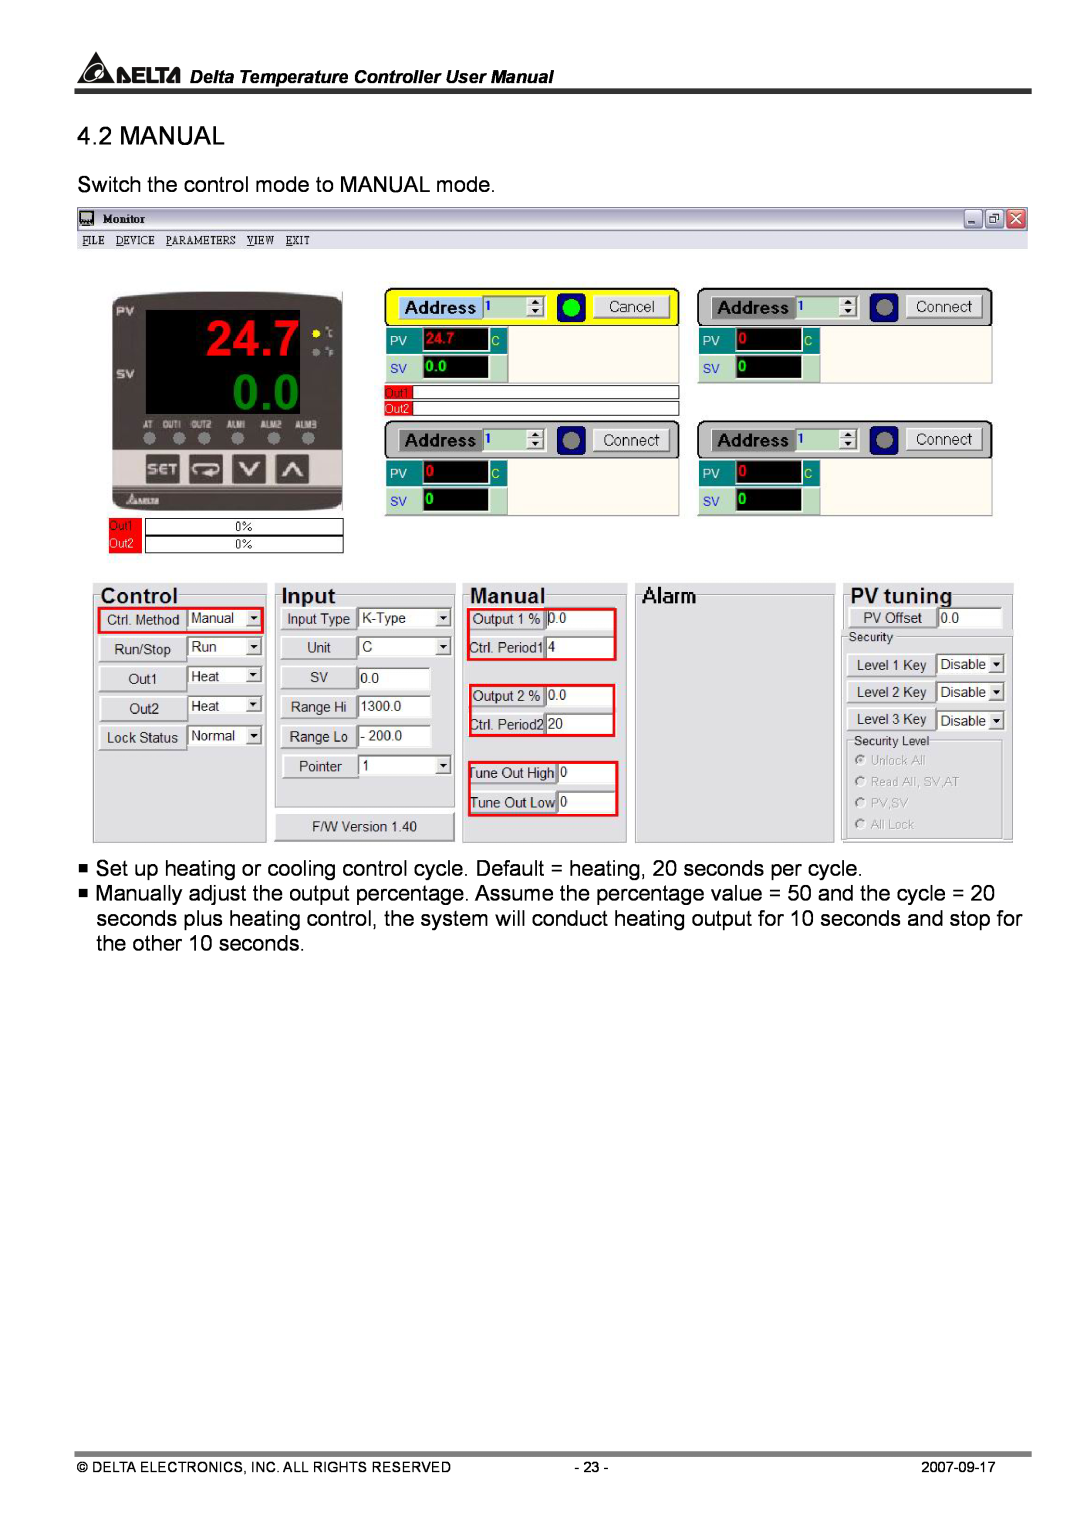 Delta Electronics DTA4896R1, DTC1000R user manual Manual 